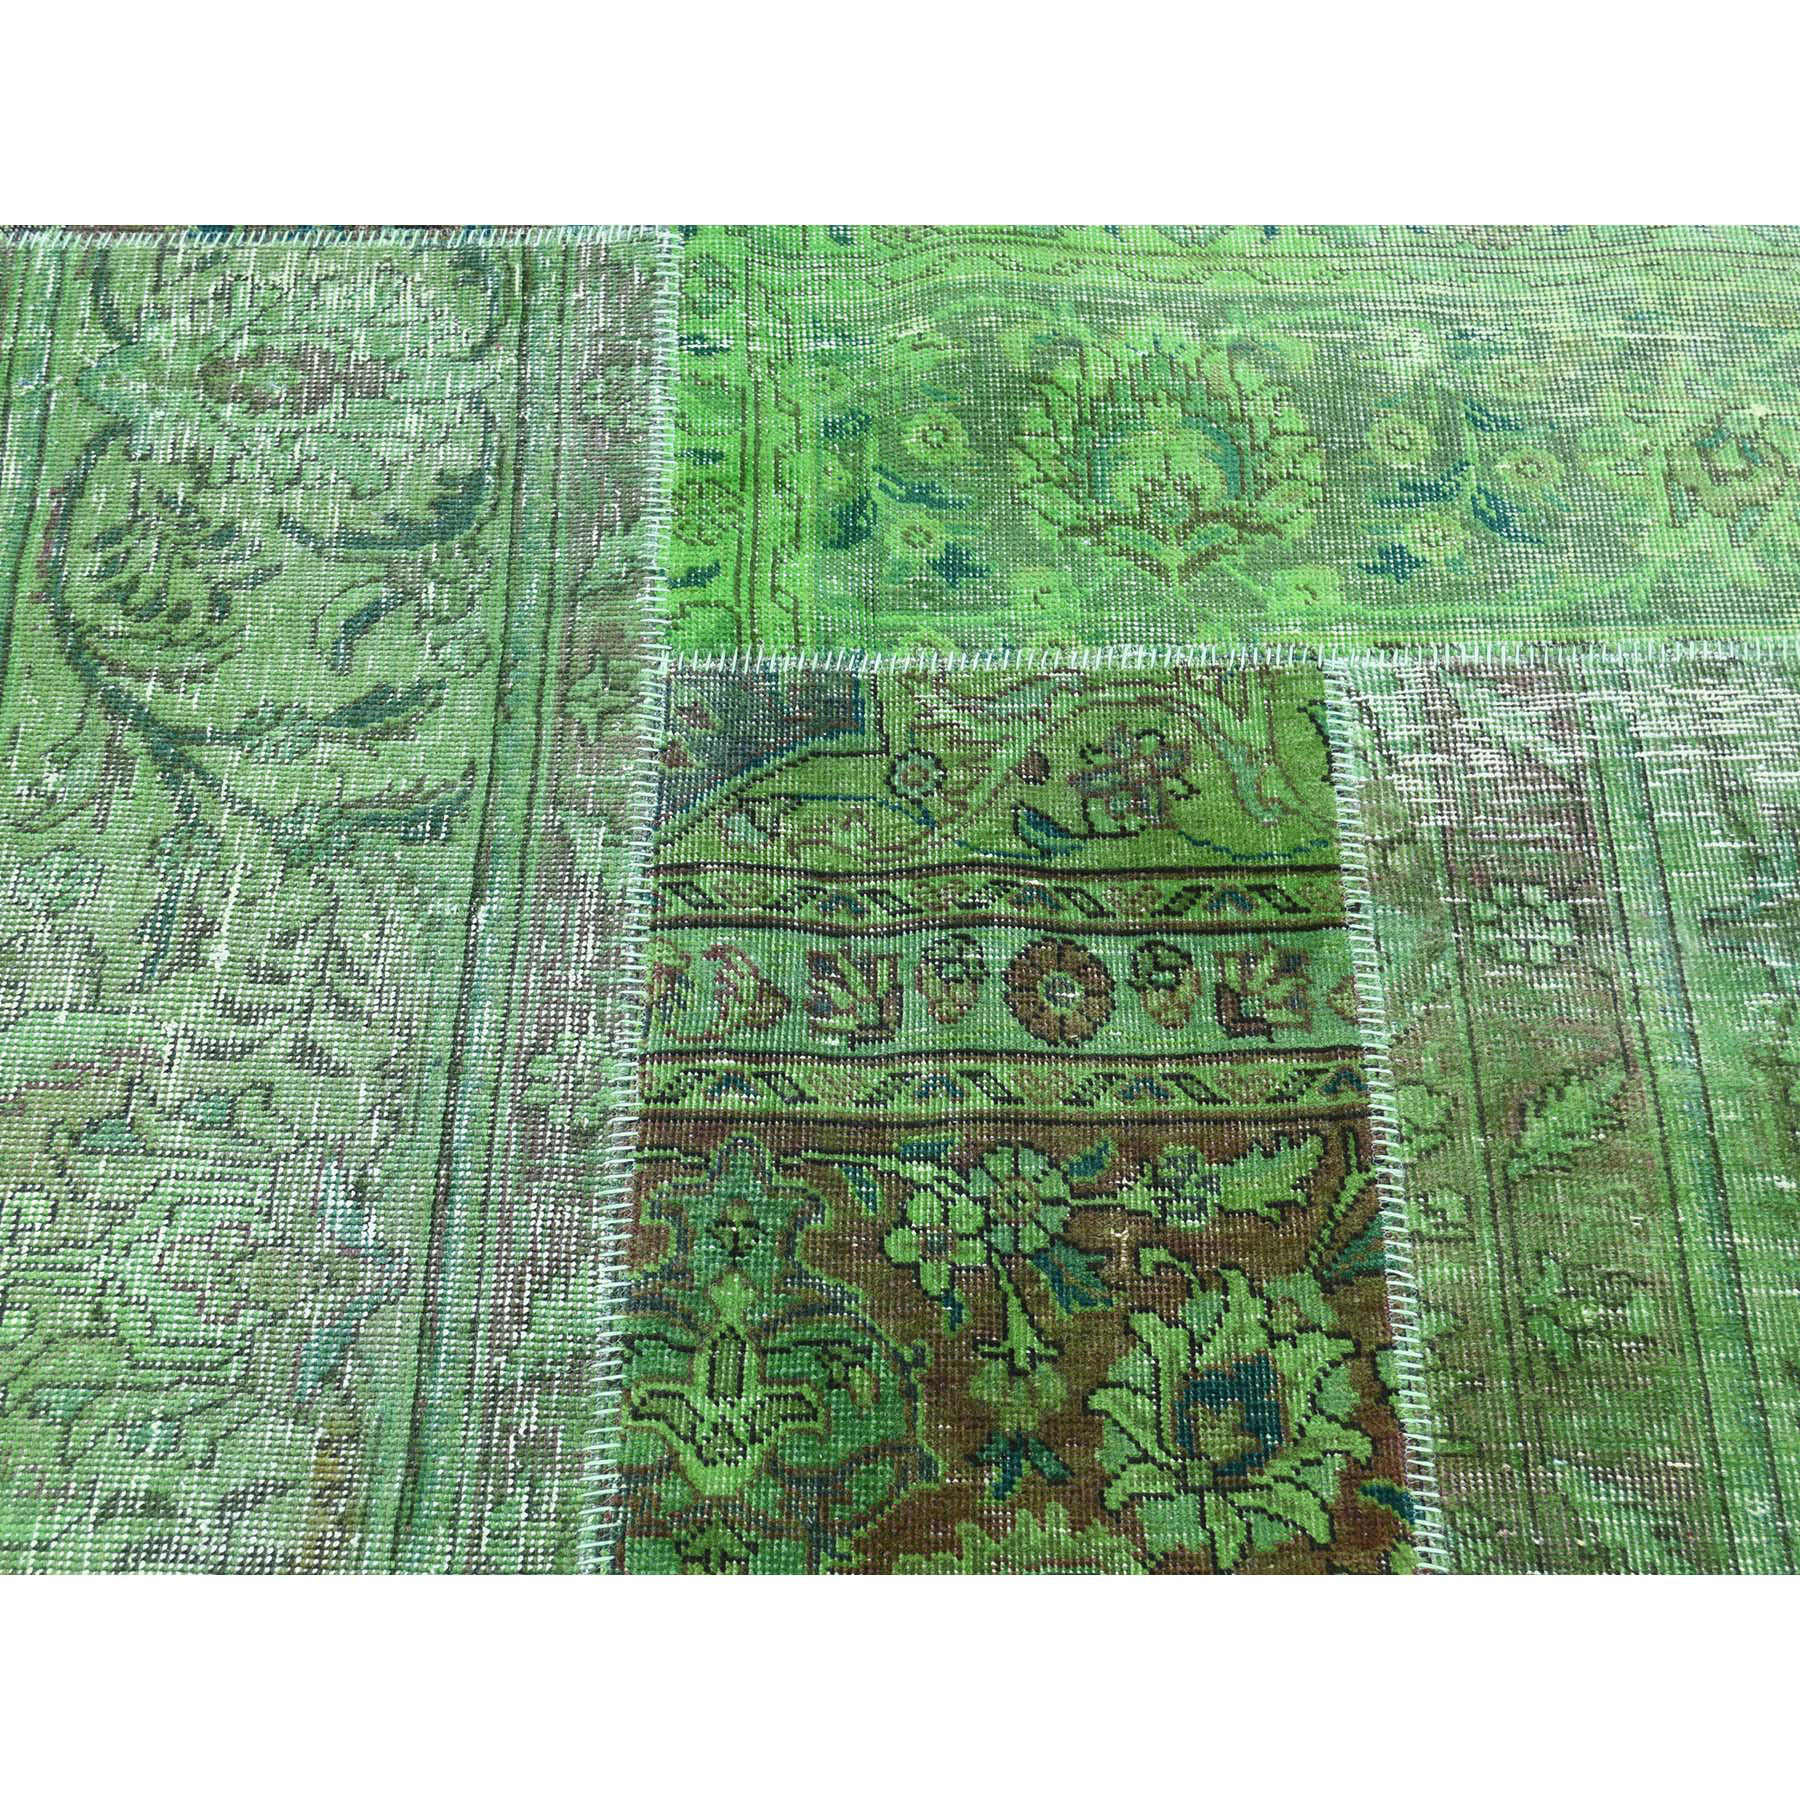 10-x13-9  Persian Overdyed Patchwork Green Cast Handmade Vintage Carpet 